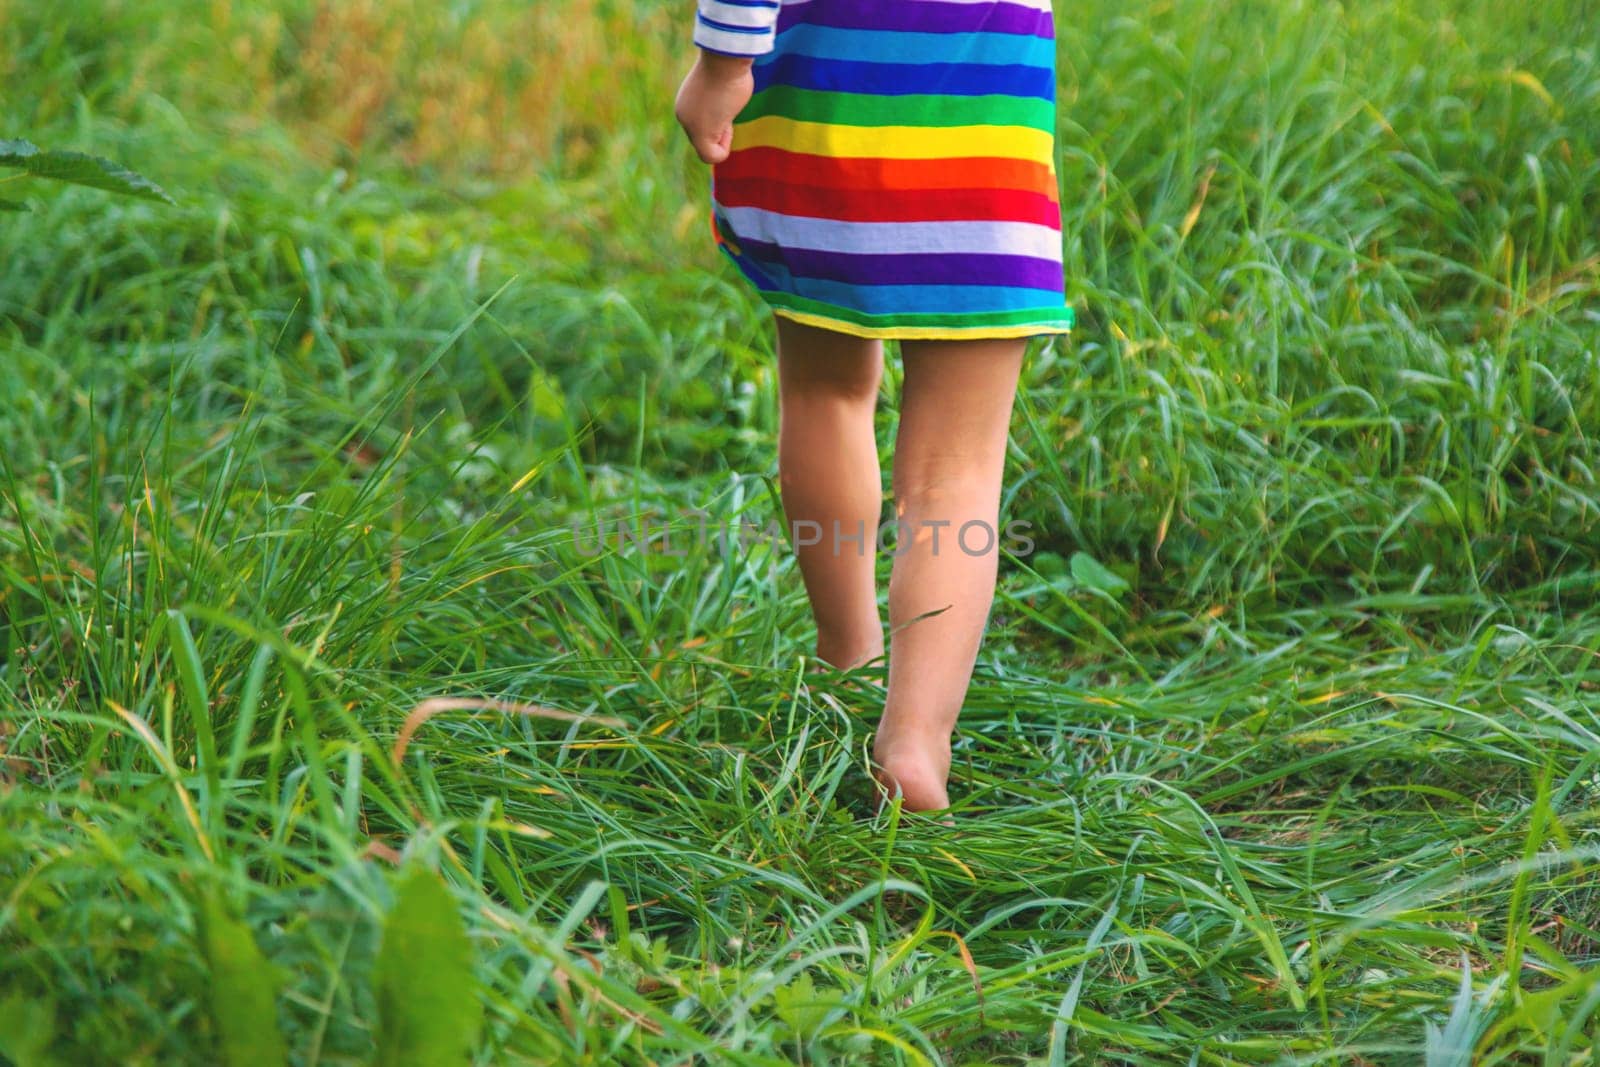 Child feet on the grass. Selective focus. by yanadjana